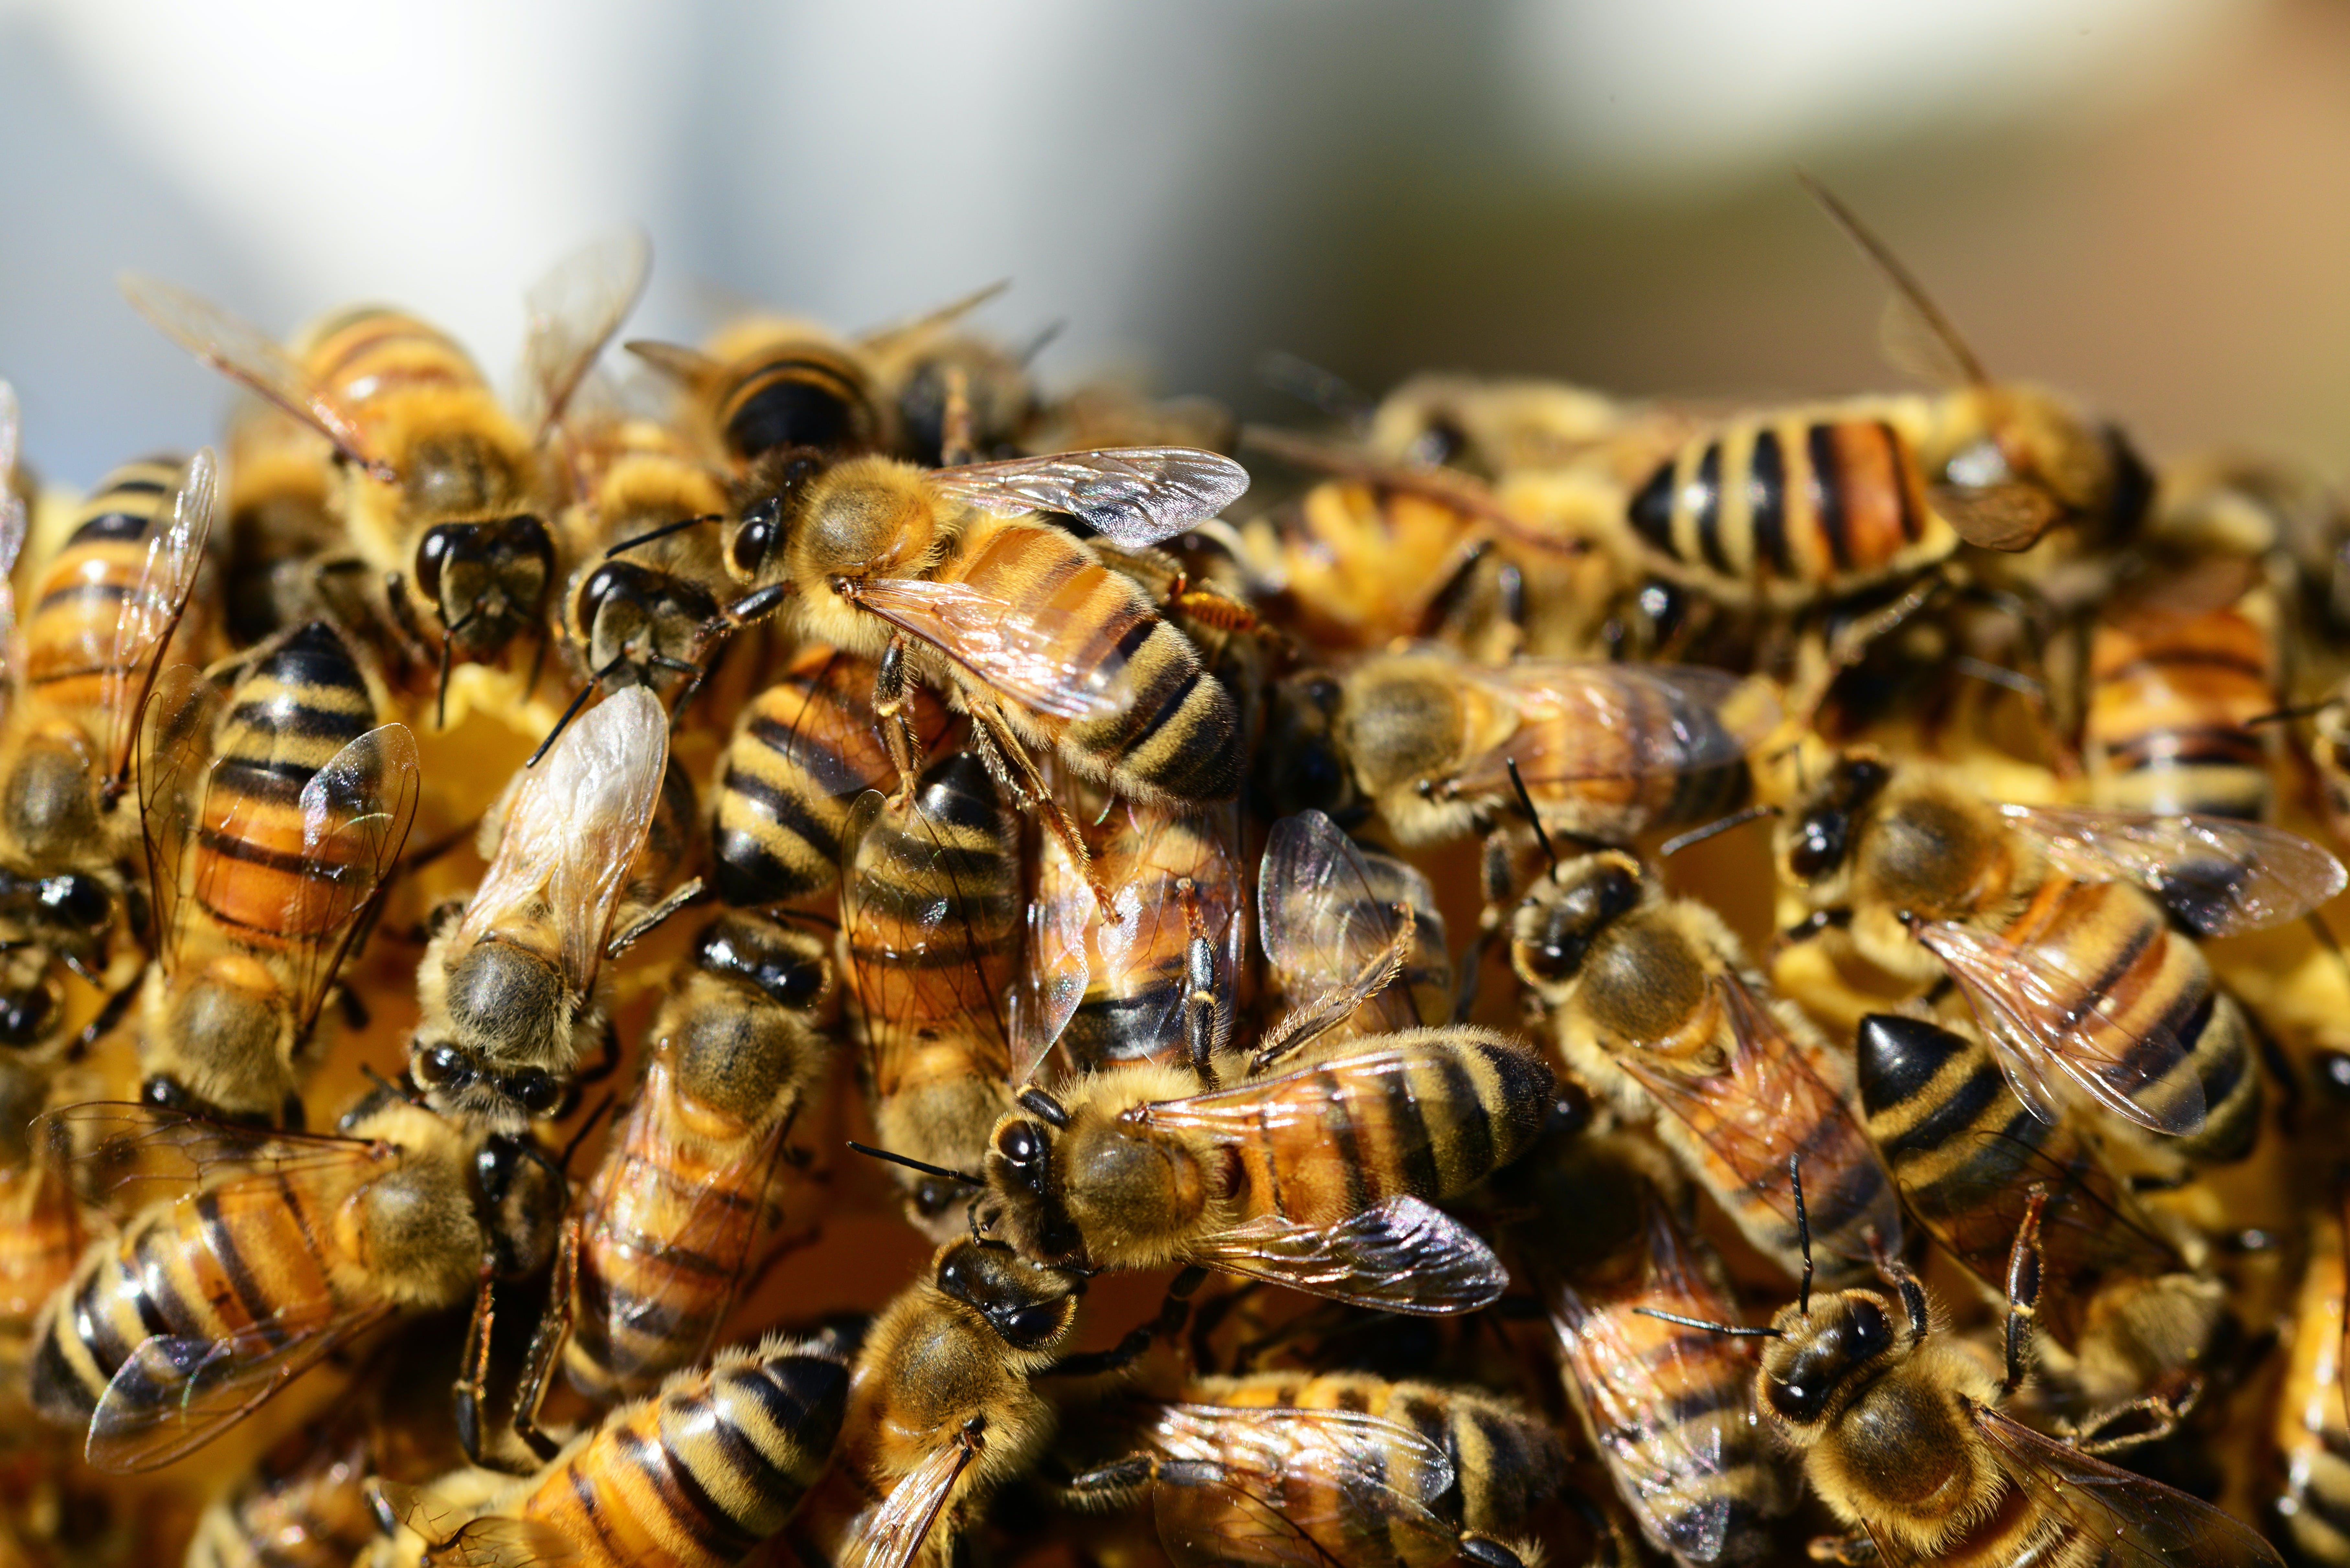 A swarm of bees | Source: Pexels